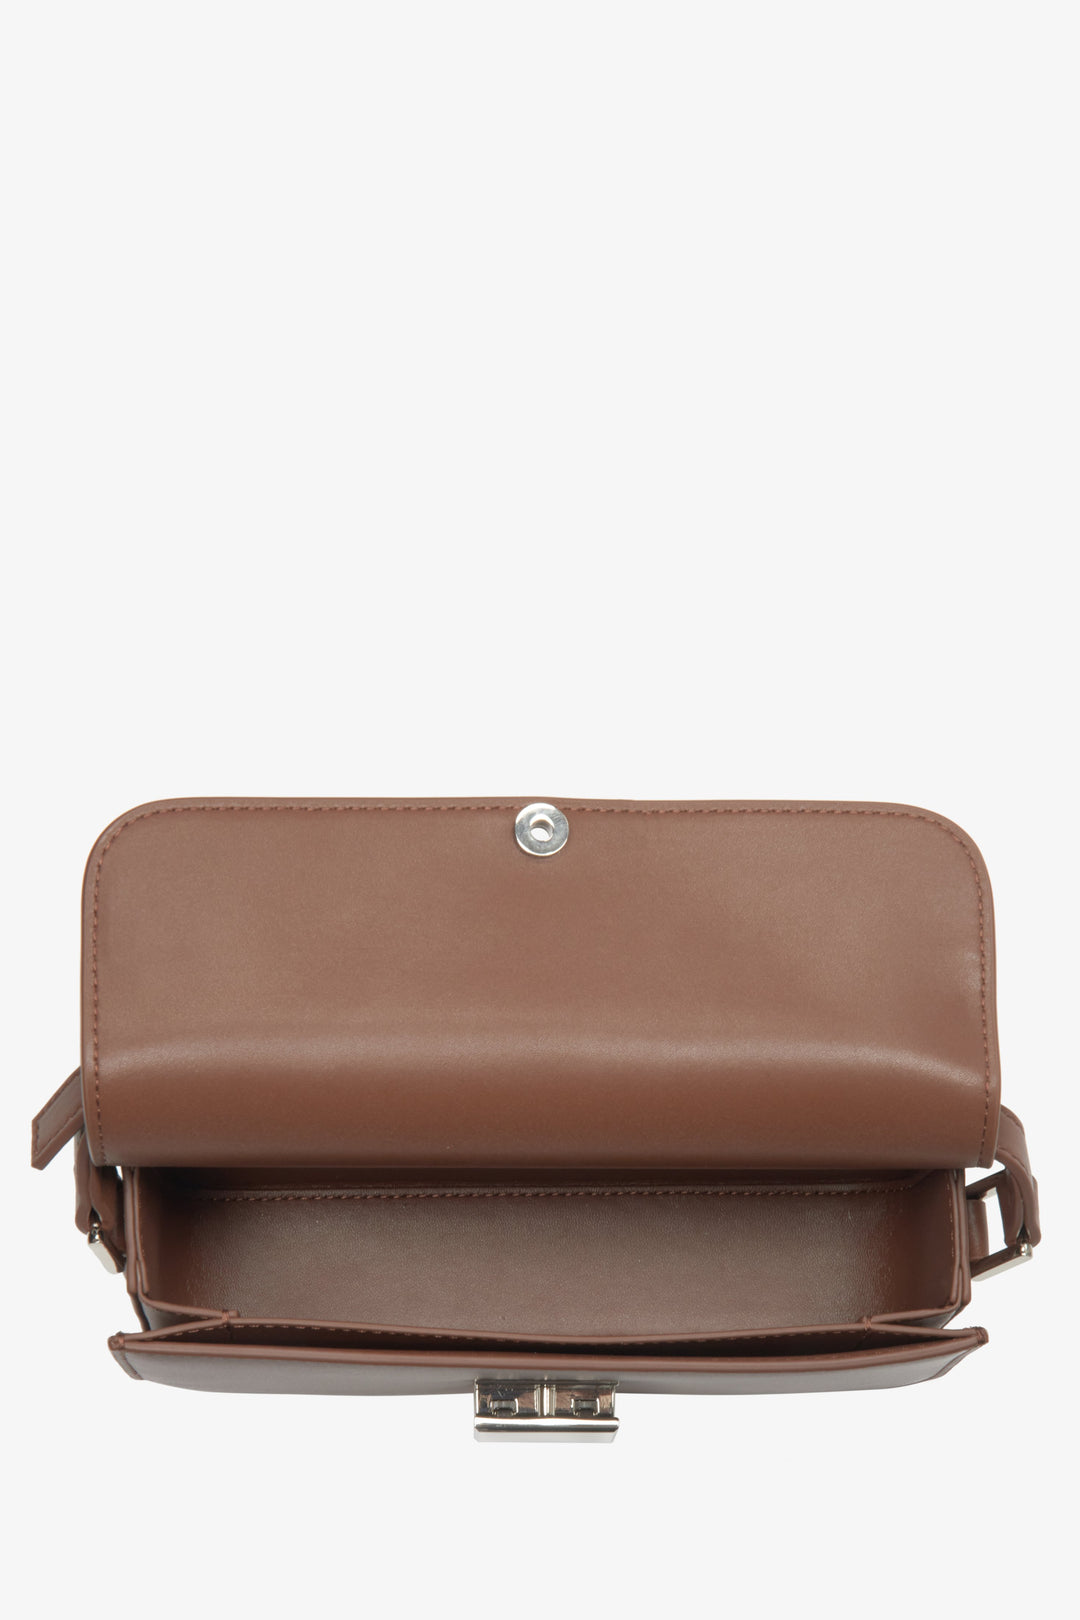 Women's small brown leather handbag Estro - interior of the model.